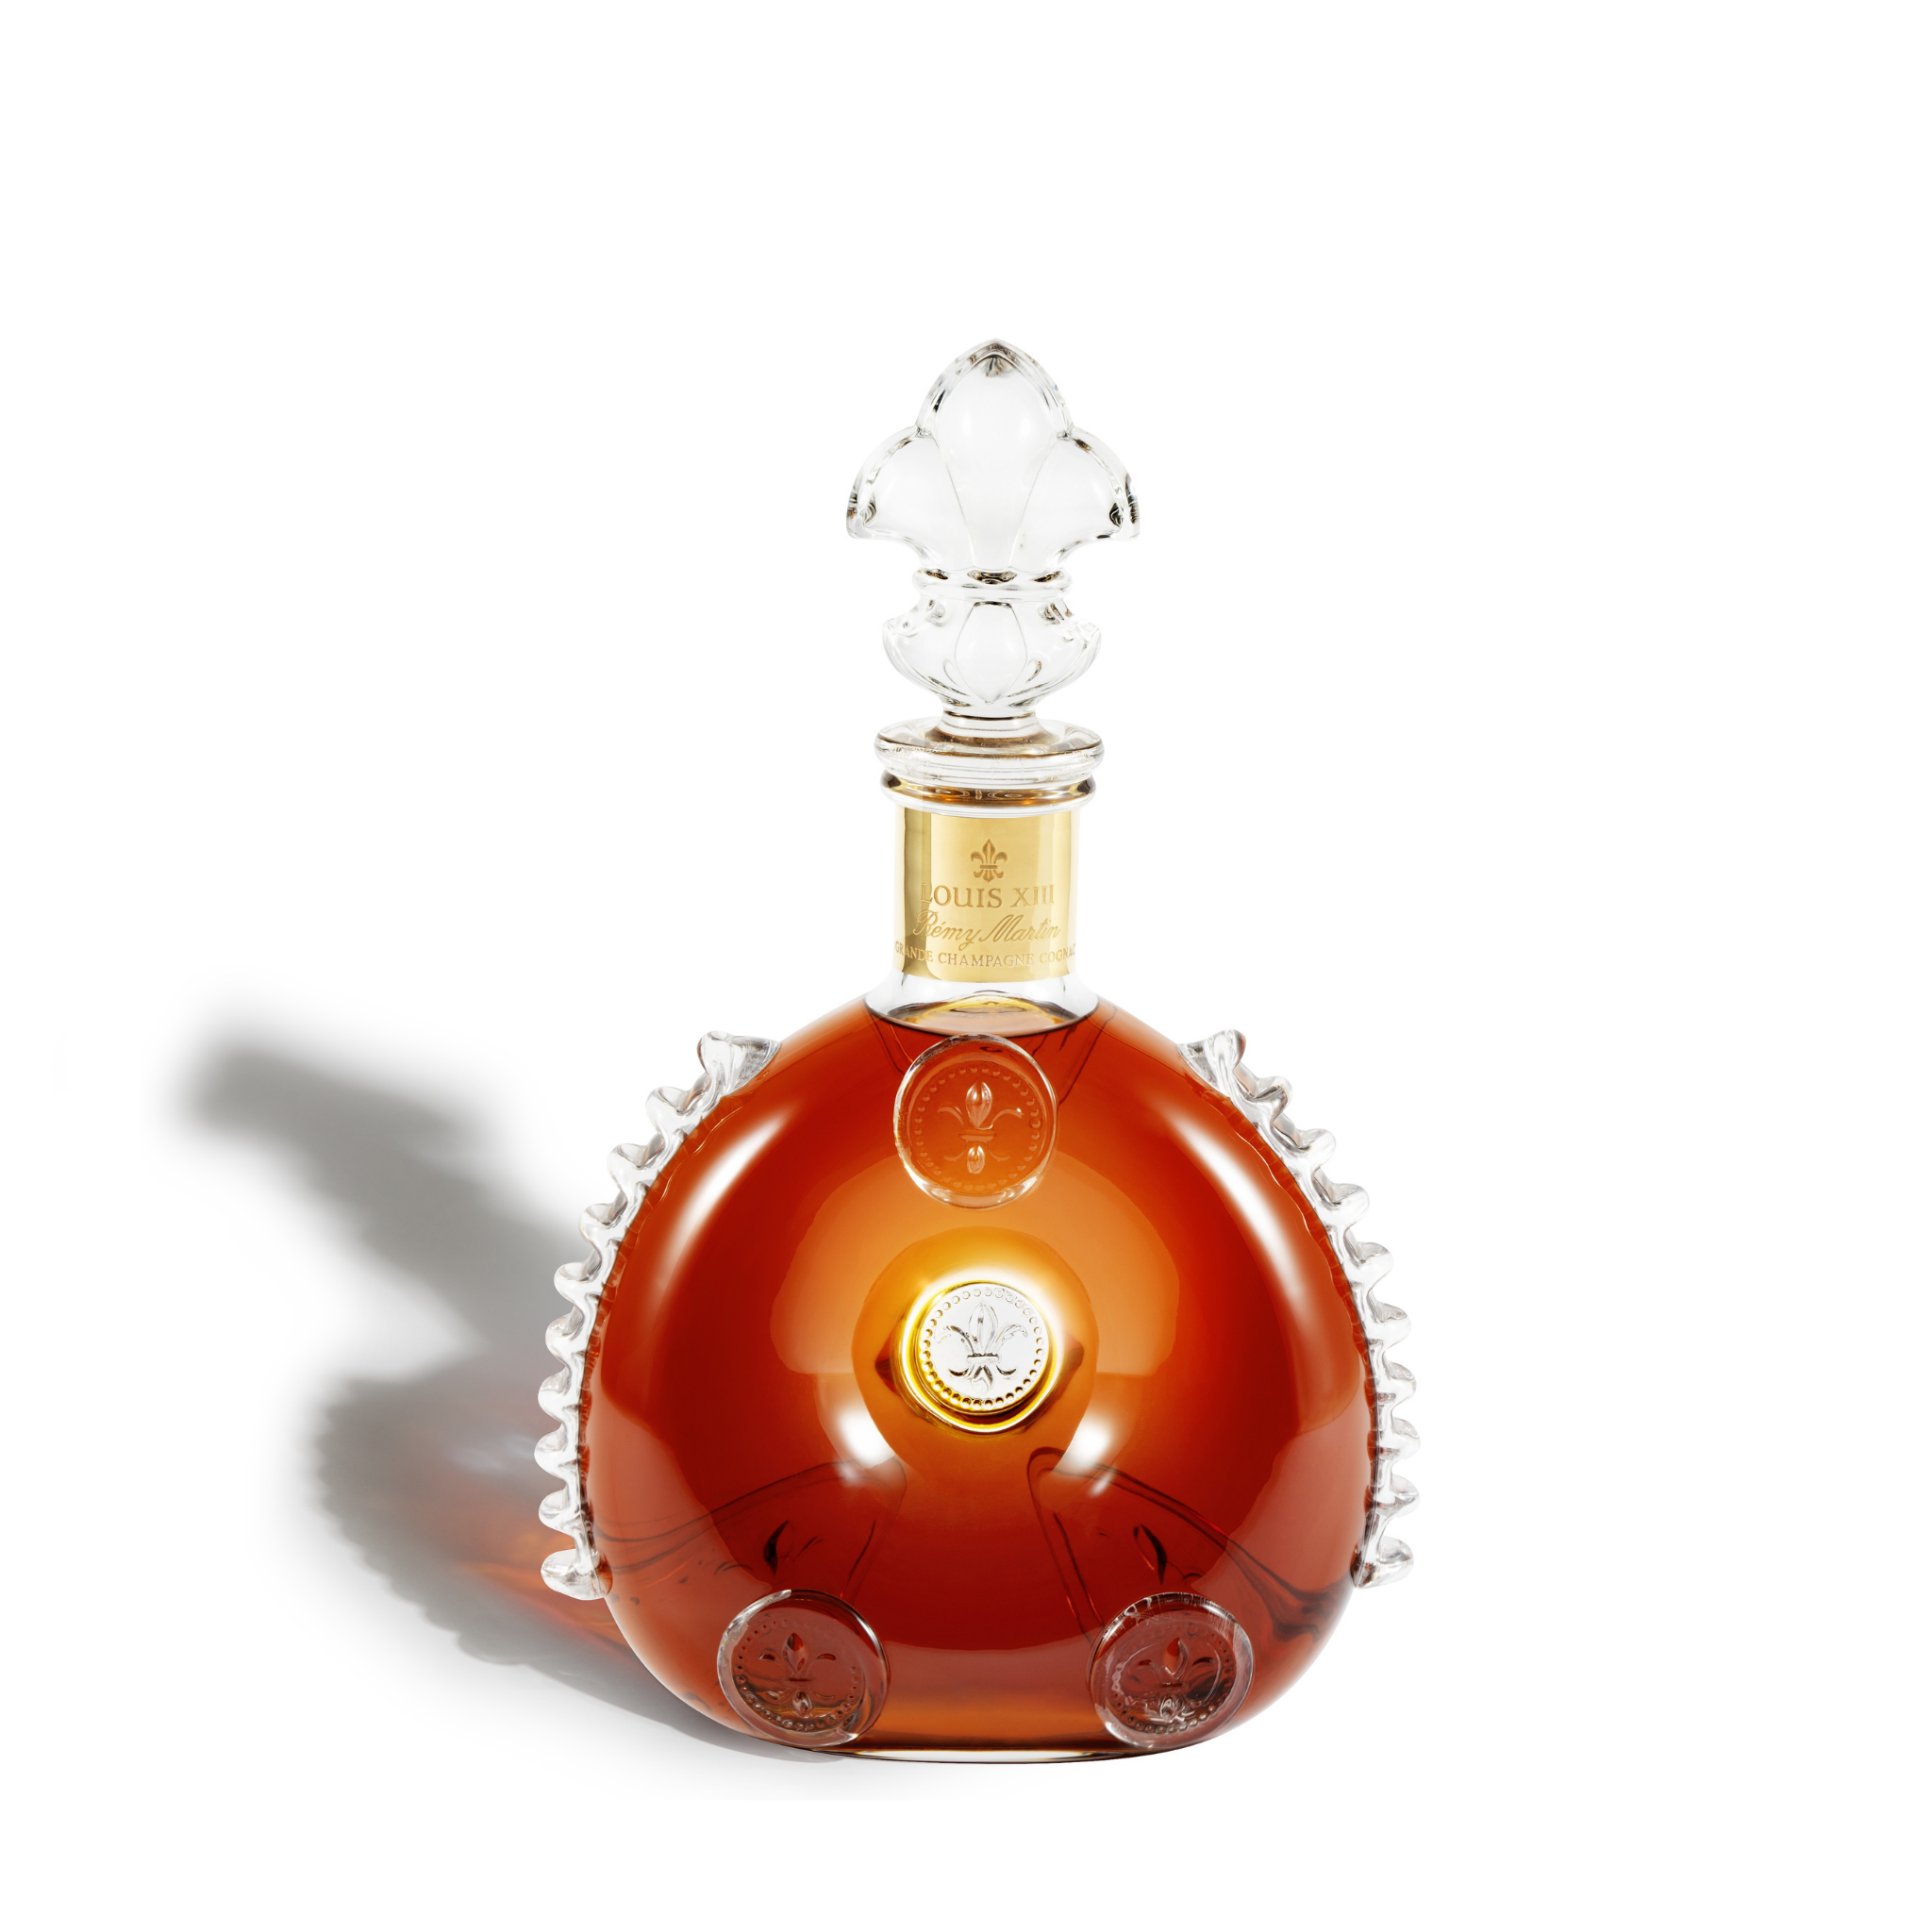 Louis XIII Cognac Showcases Rare Cask 42.1 in New York City – WWD